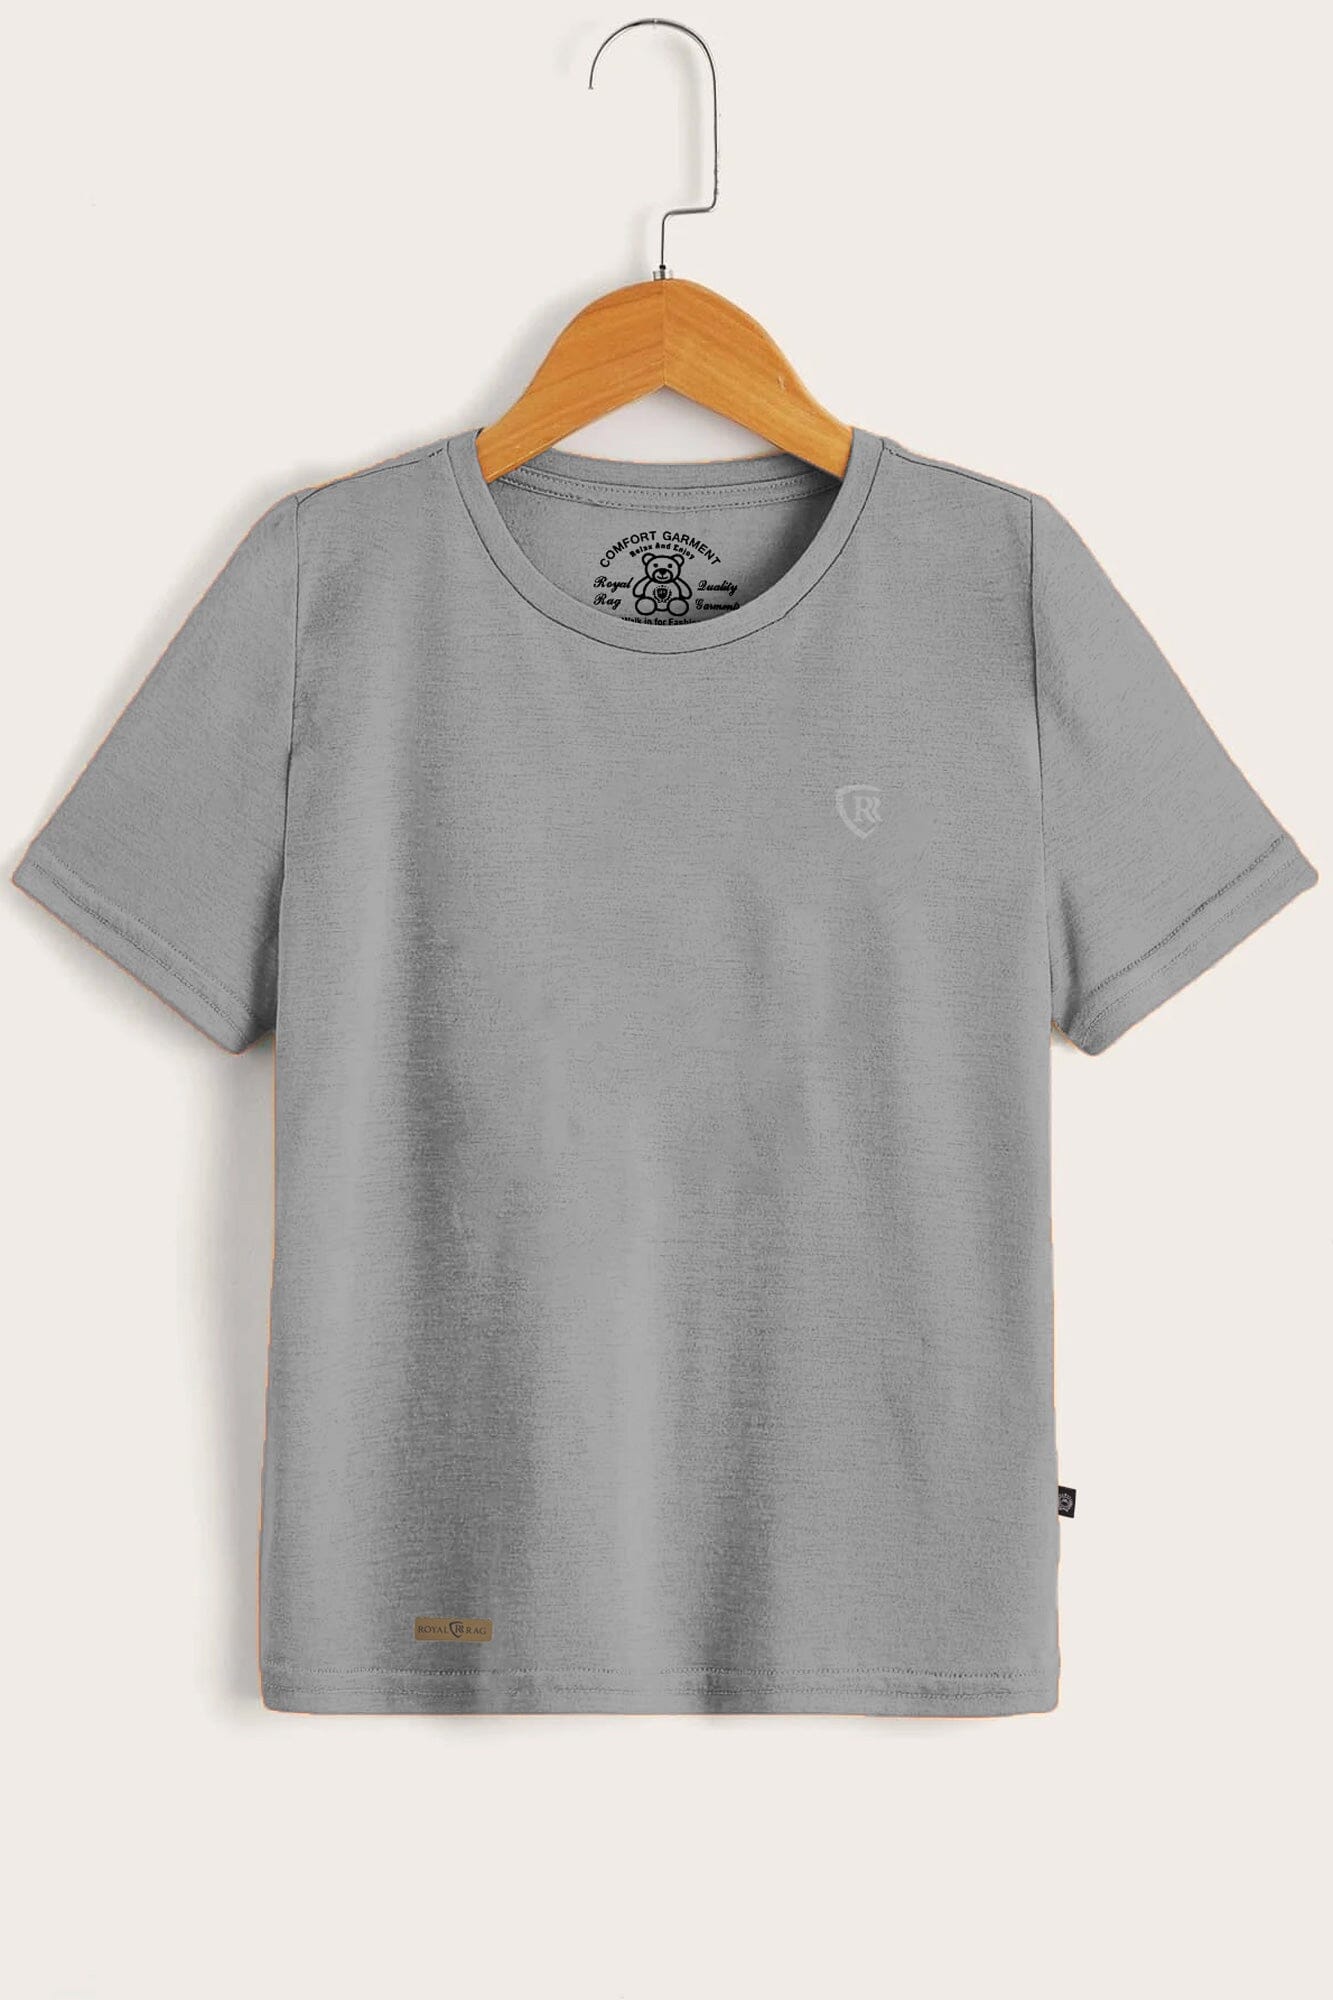 RR Kid's Logo Printed Short Sleeve Tee Shirt Boy's Tee Shirt Usman Traders Grey 2-3 Years 